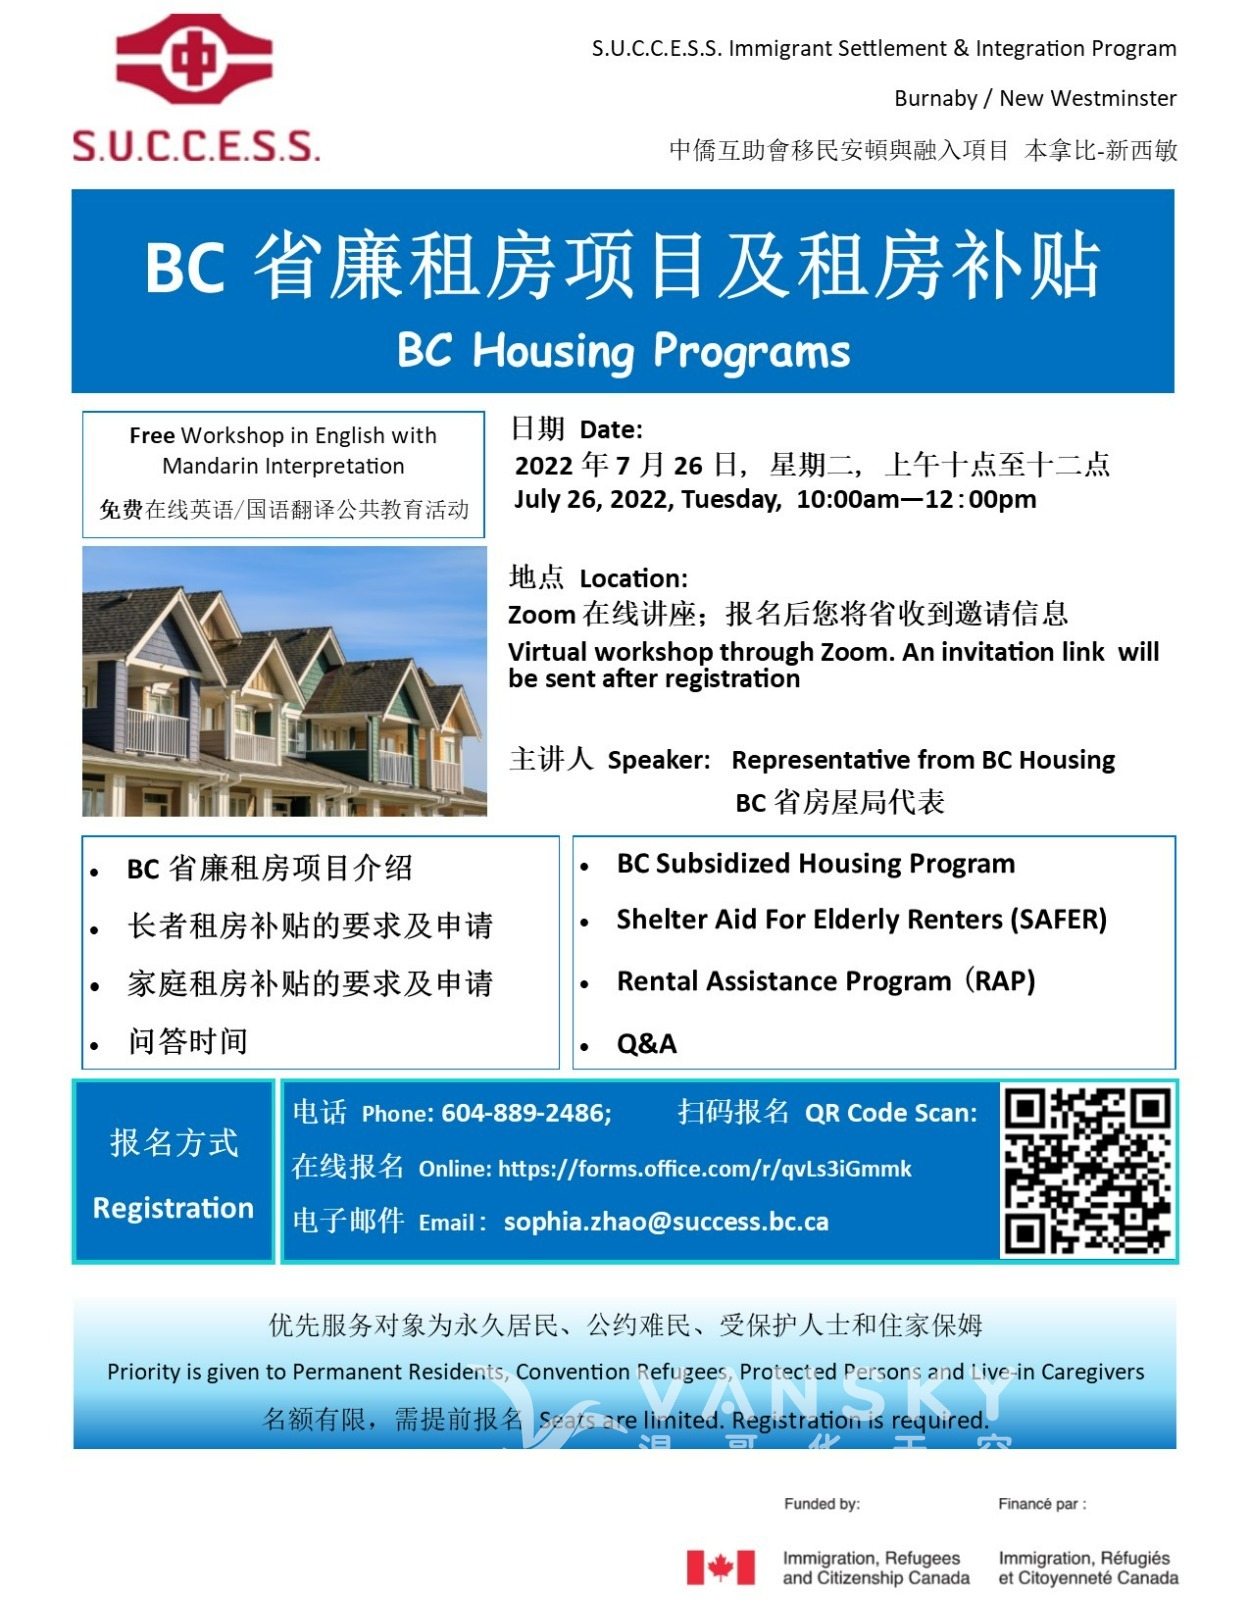 220711160209_BC Housing.jpg